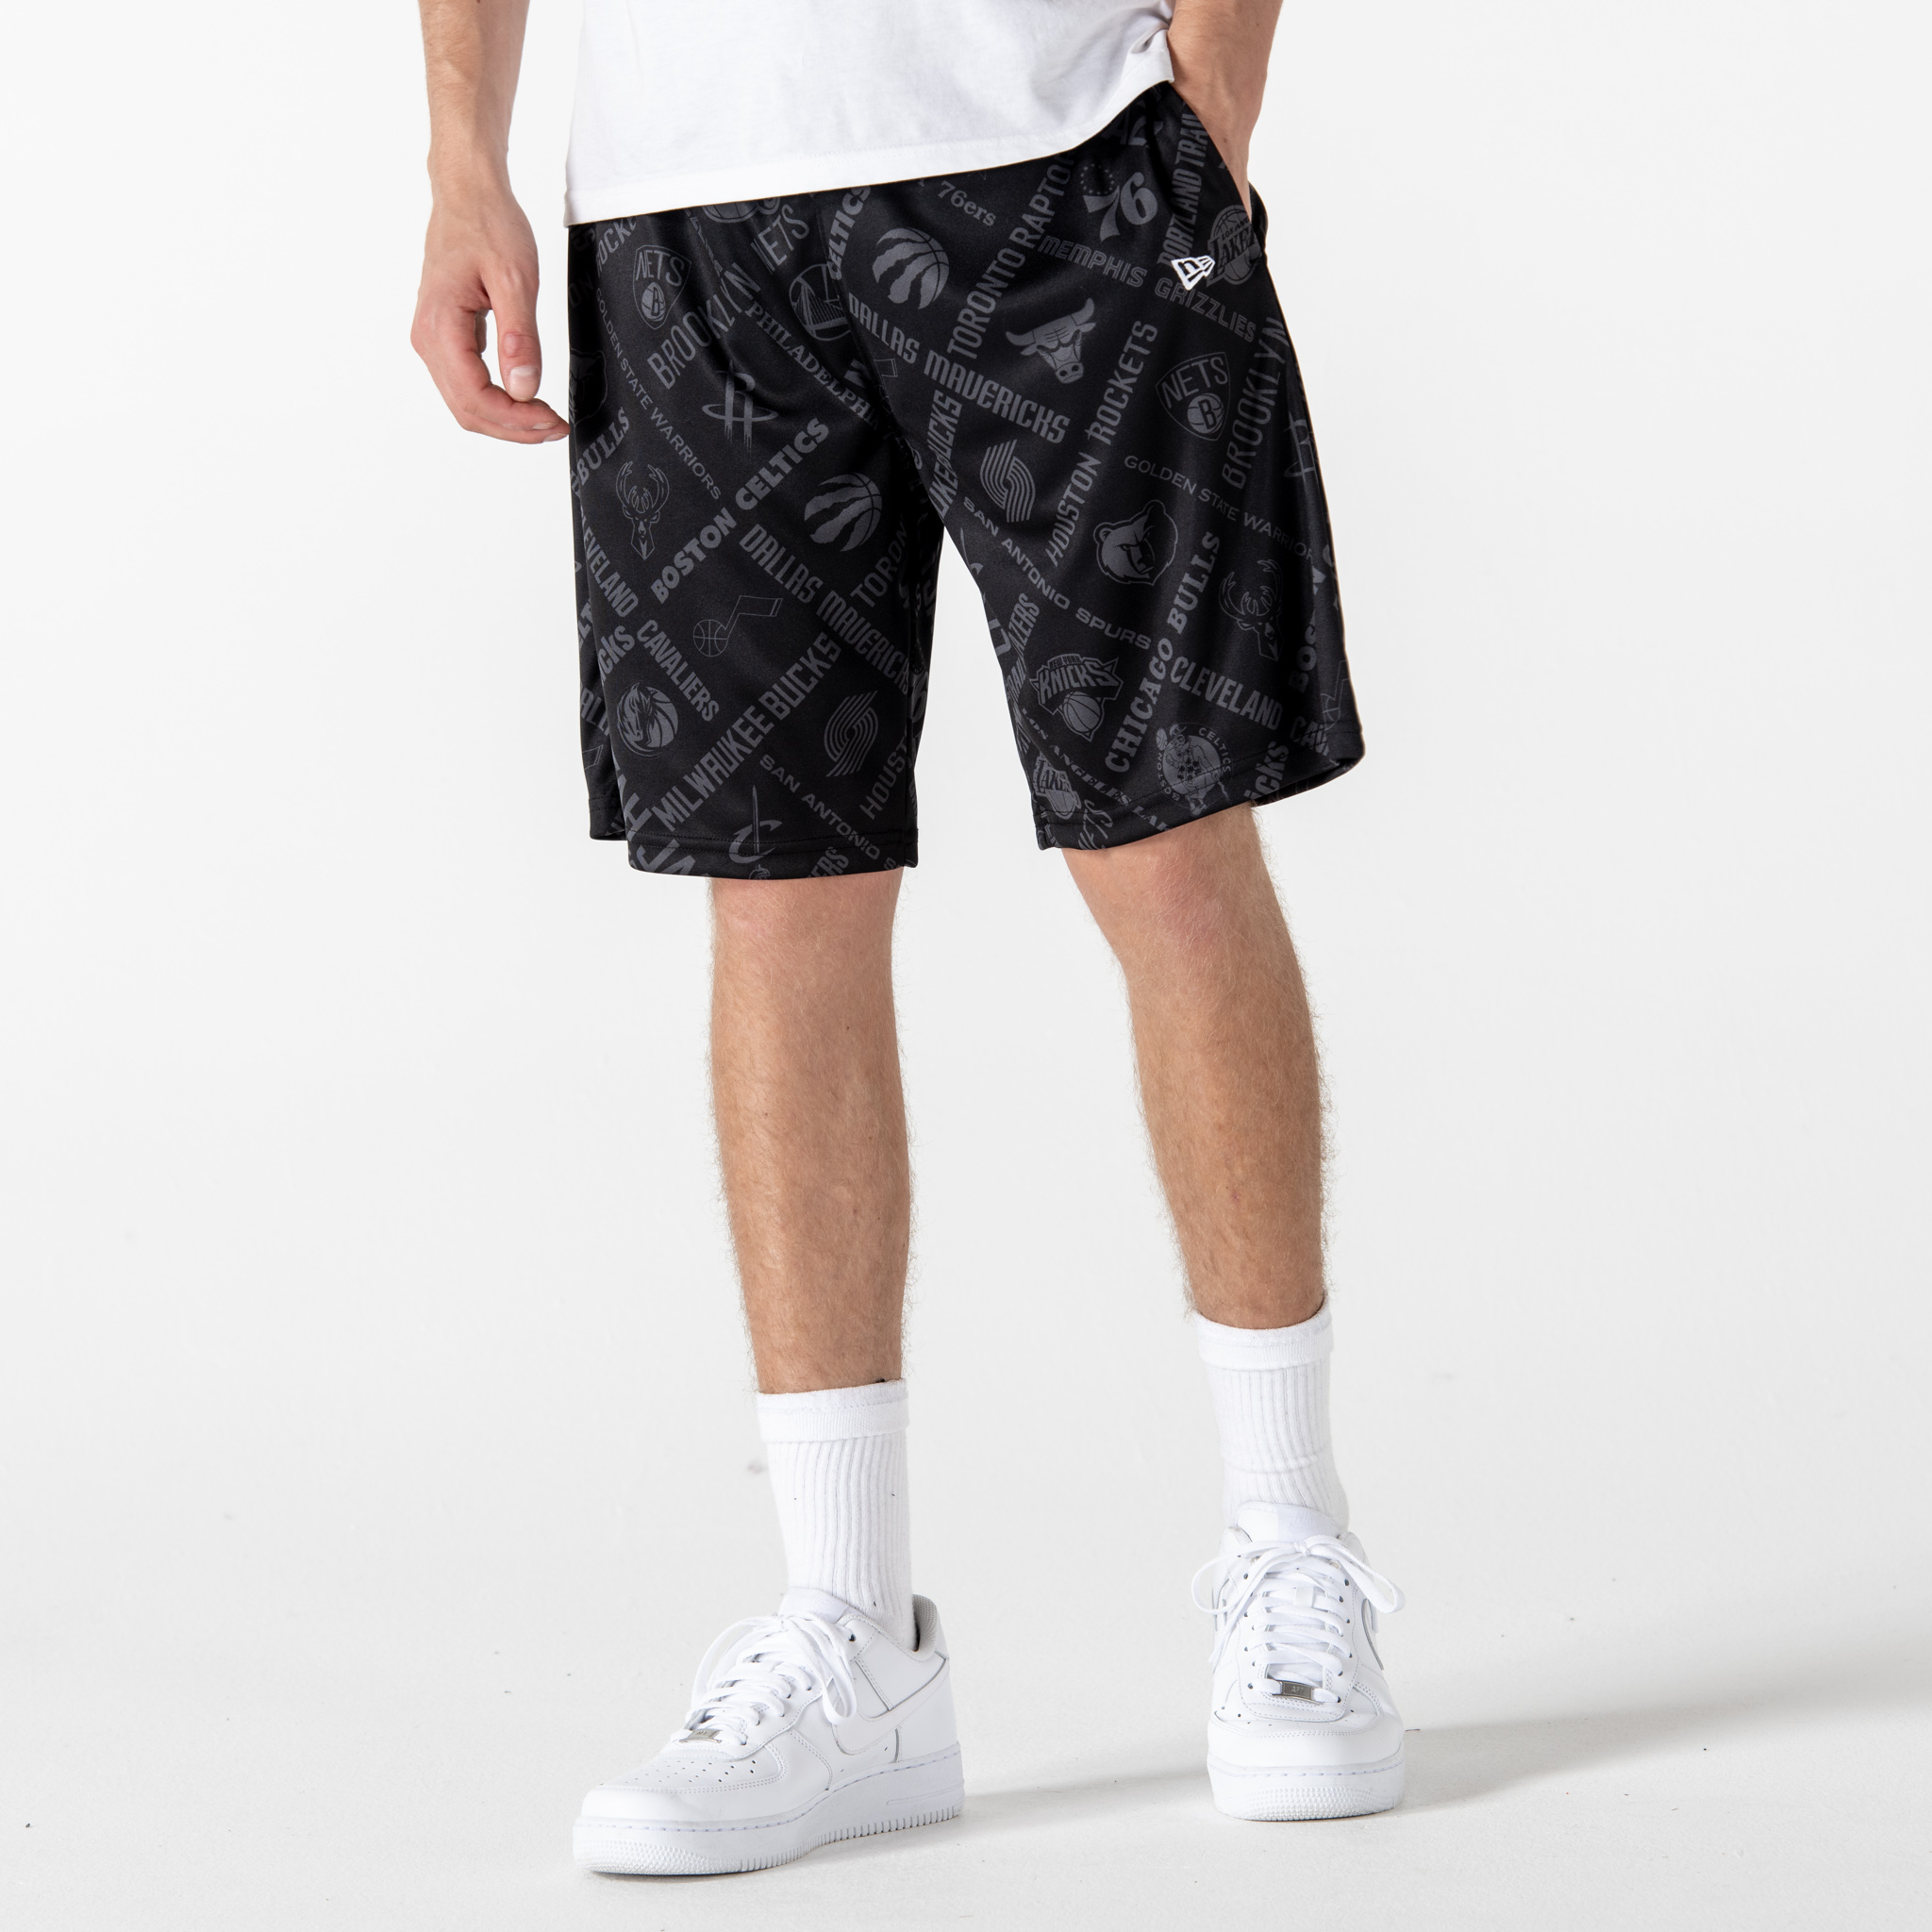 Schwarze Shorts mit NBA-Muster